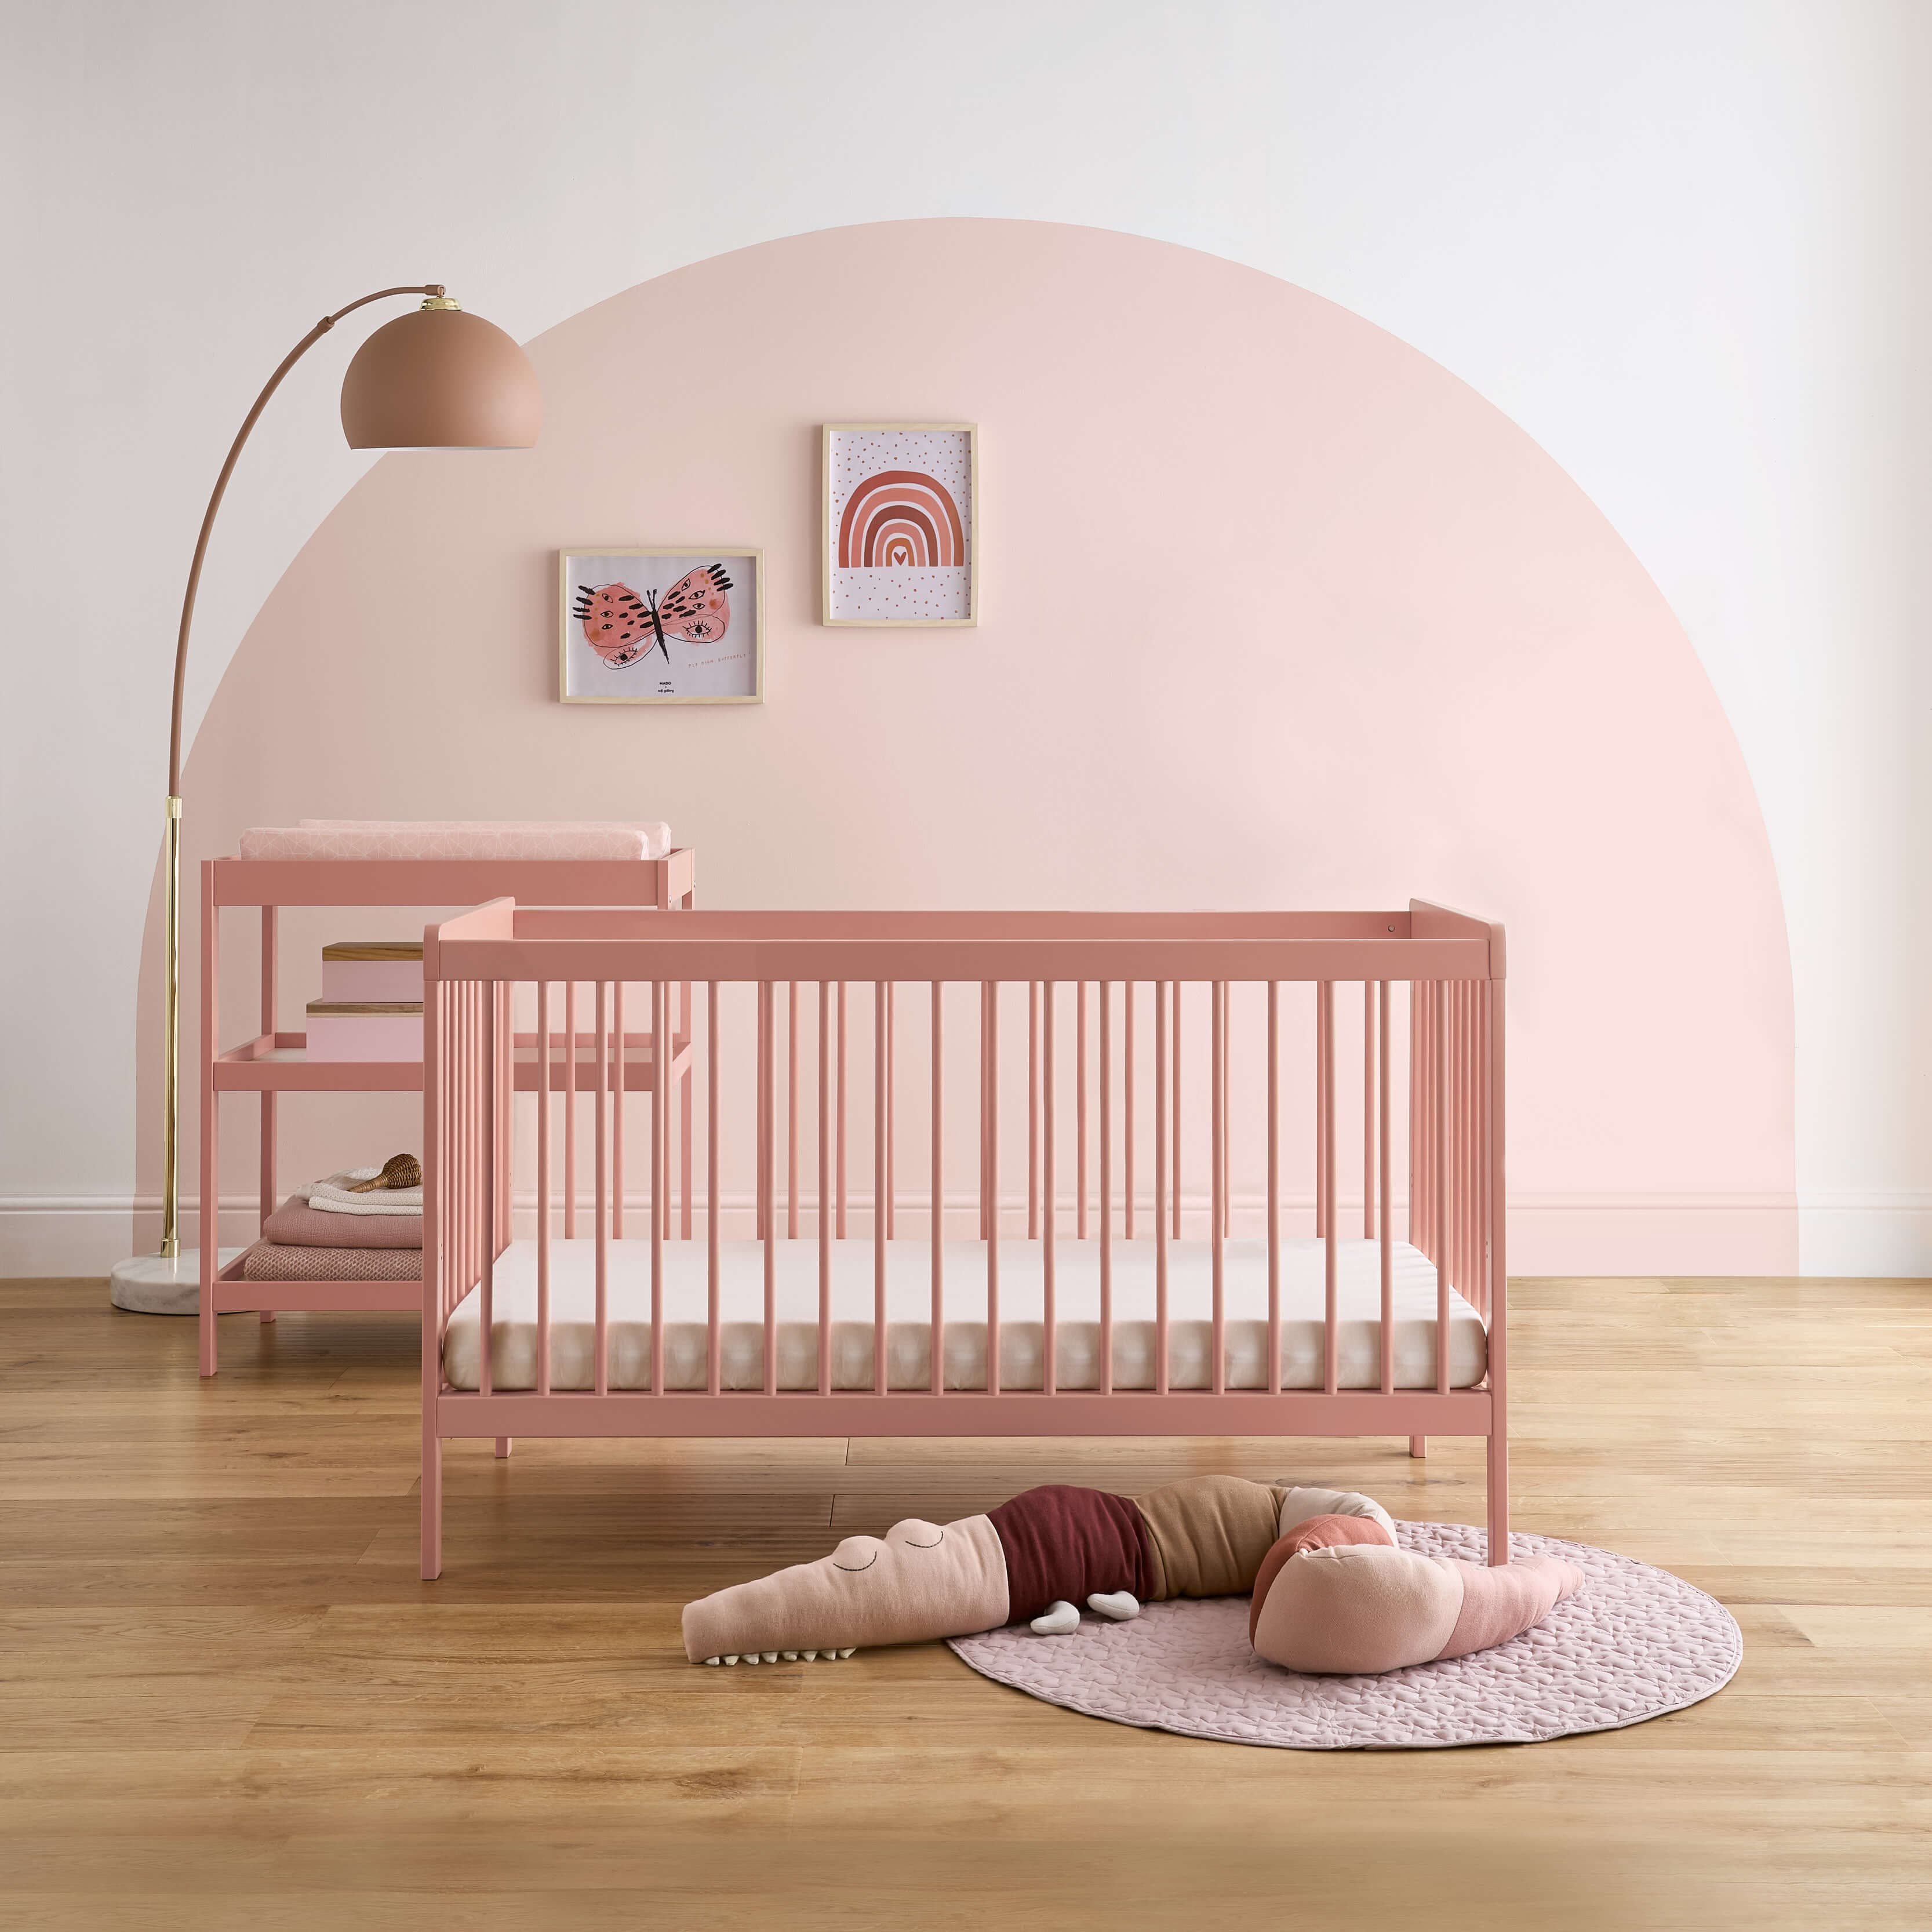 CuddleCo Nursery Room Sets CuddleCo Nola 2 Piece Room Set - Soft Blush